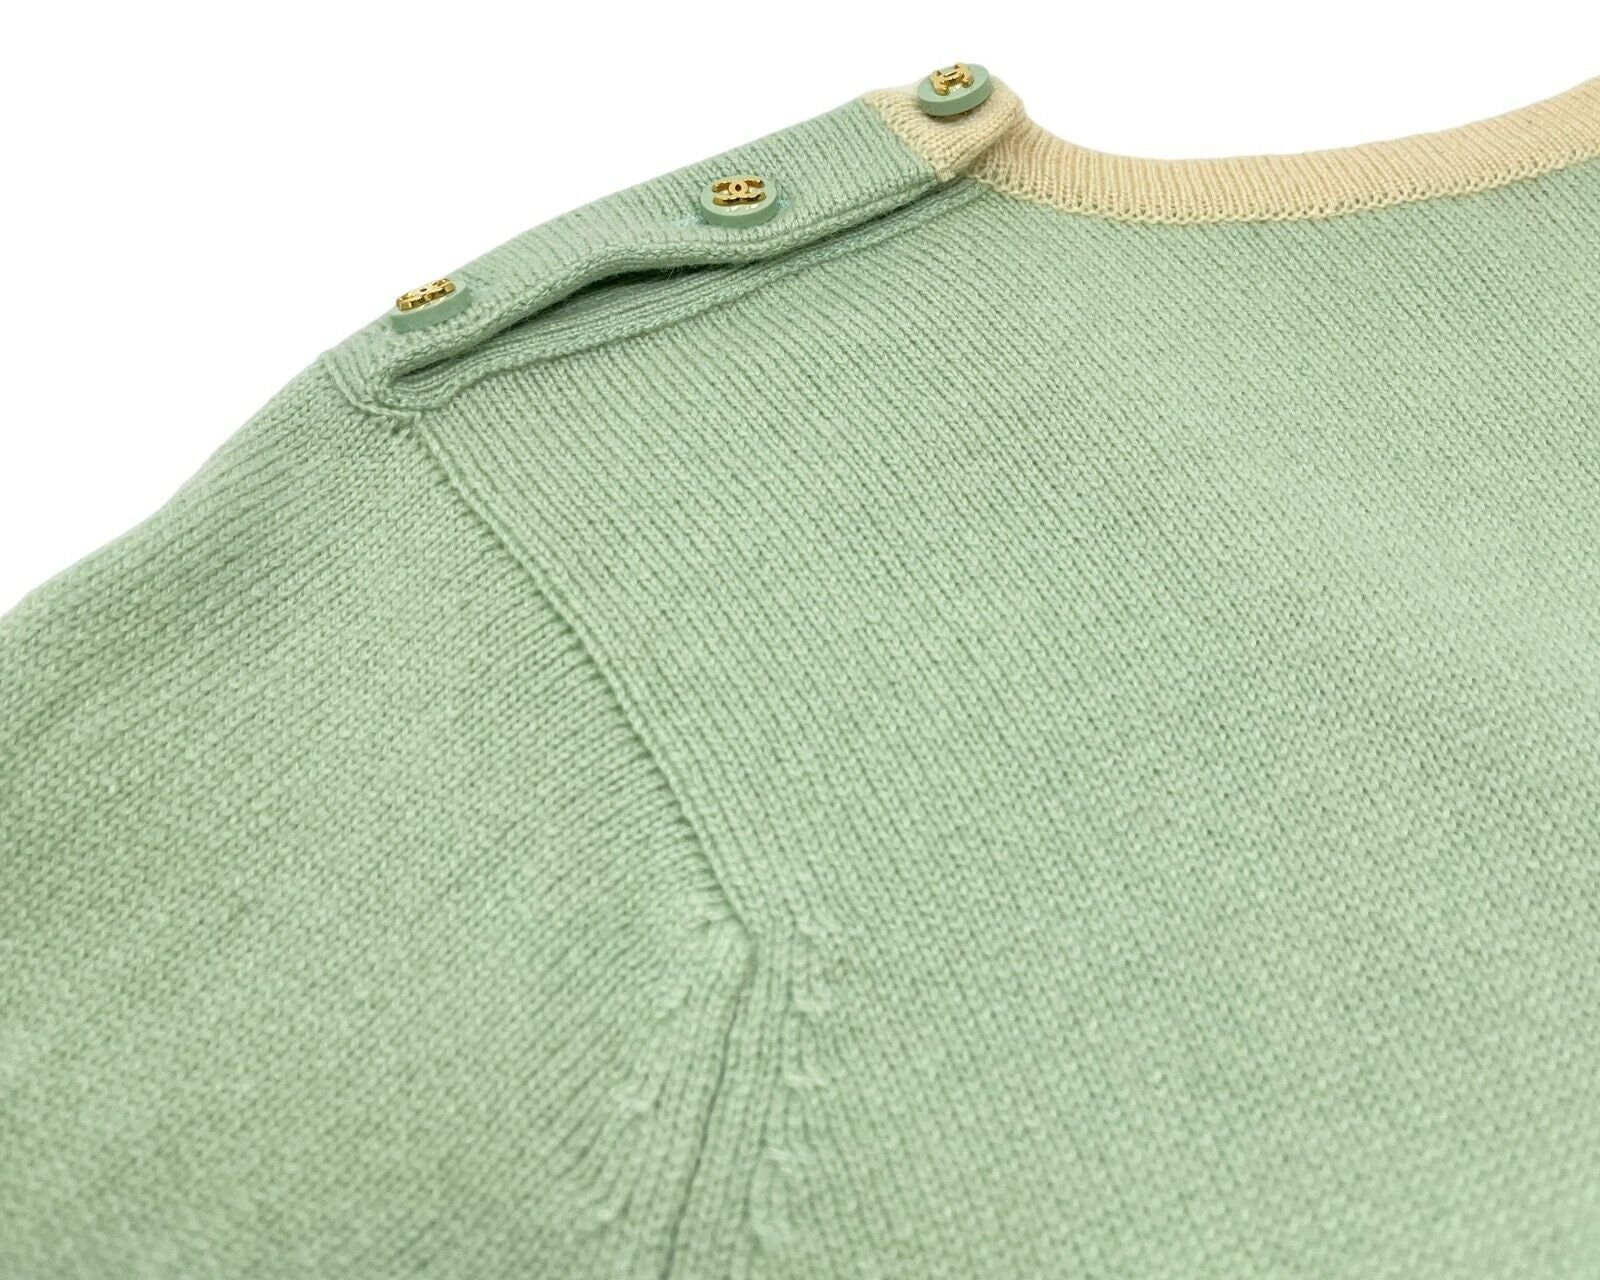 CHANEL Vintage 96C CC Logo Knit Top #40 Light Green Gold Button Cashmere RankAB